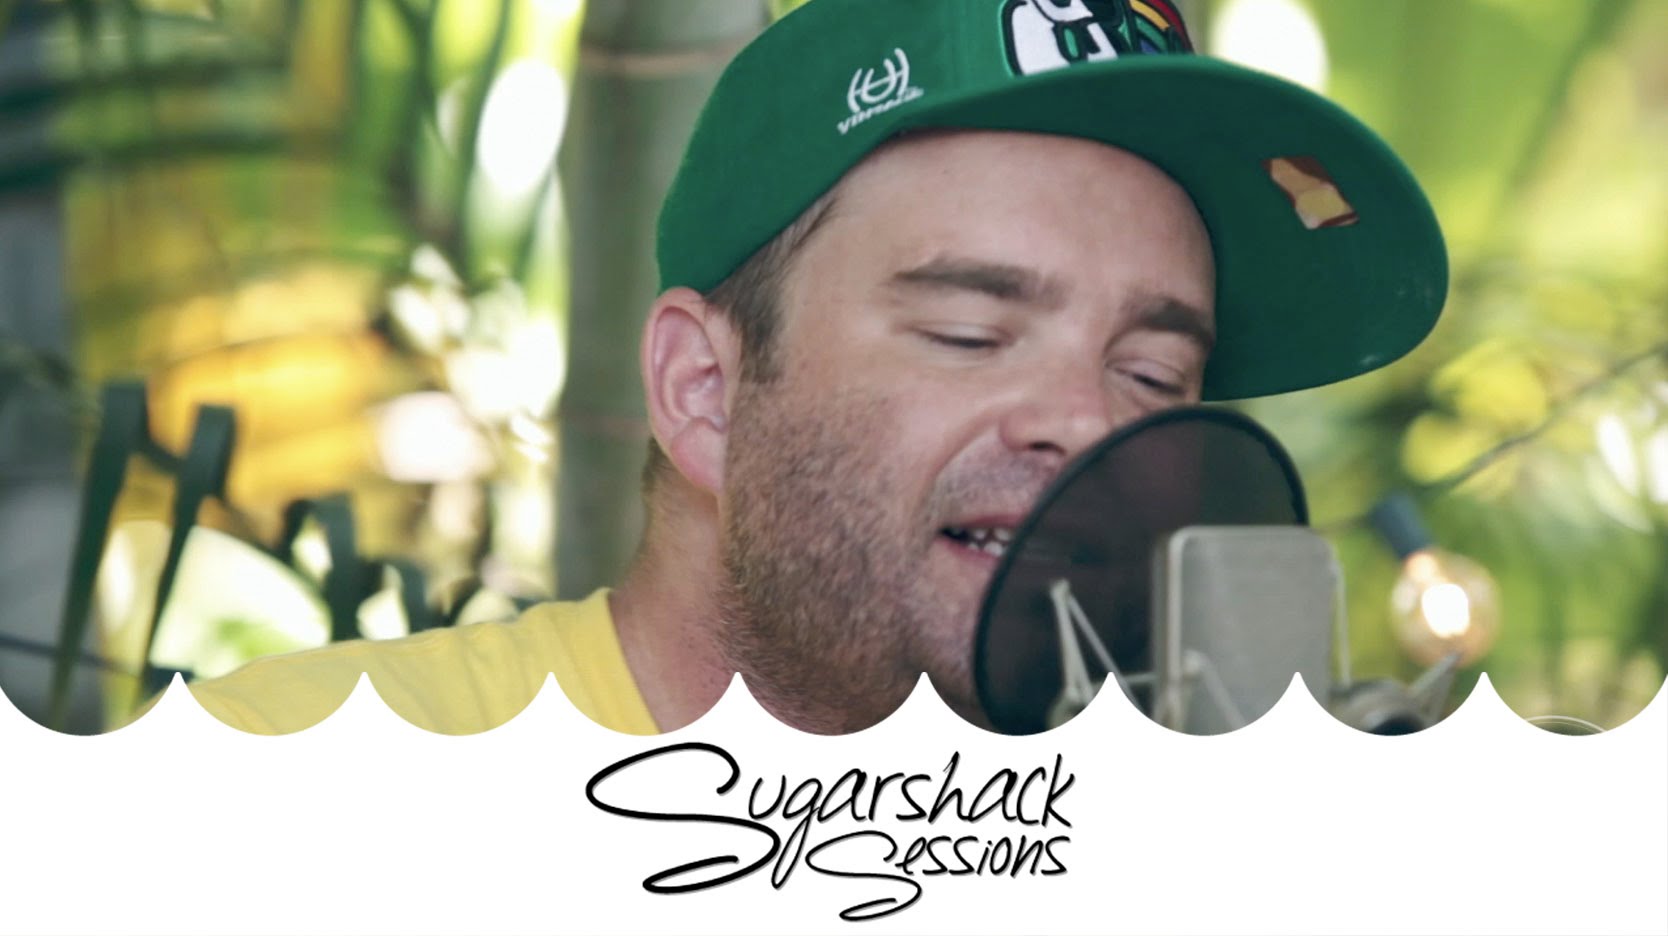 The Movement - Habit @ Sugarshack Sessions [12/2/2014]